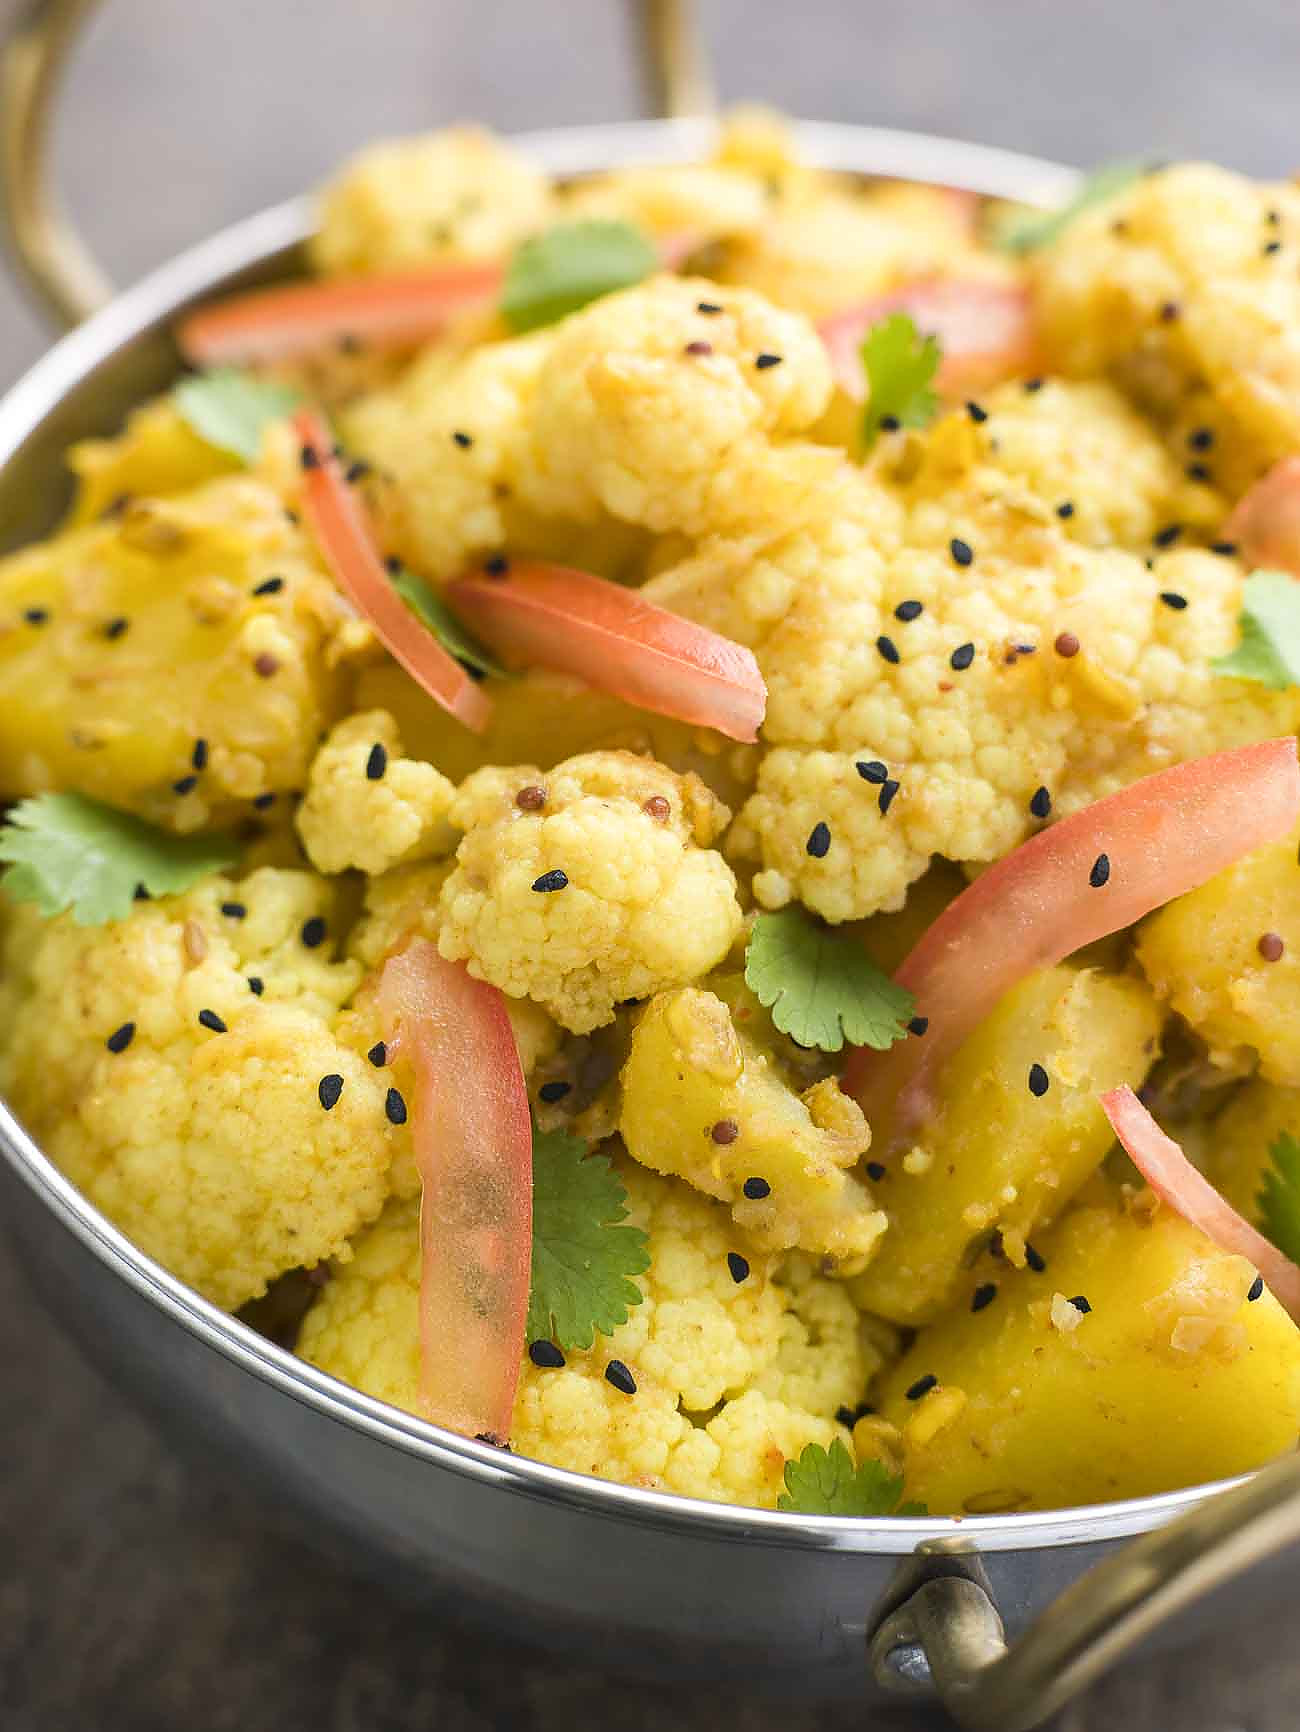 कलौंजी वाली आलू गोभी की सब्ज़ी रेसिपी - Cauliflower & Potato Stir Fry with Nigella Seeds (Recipe In Hindi)